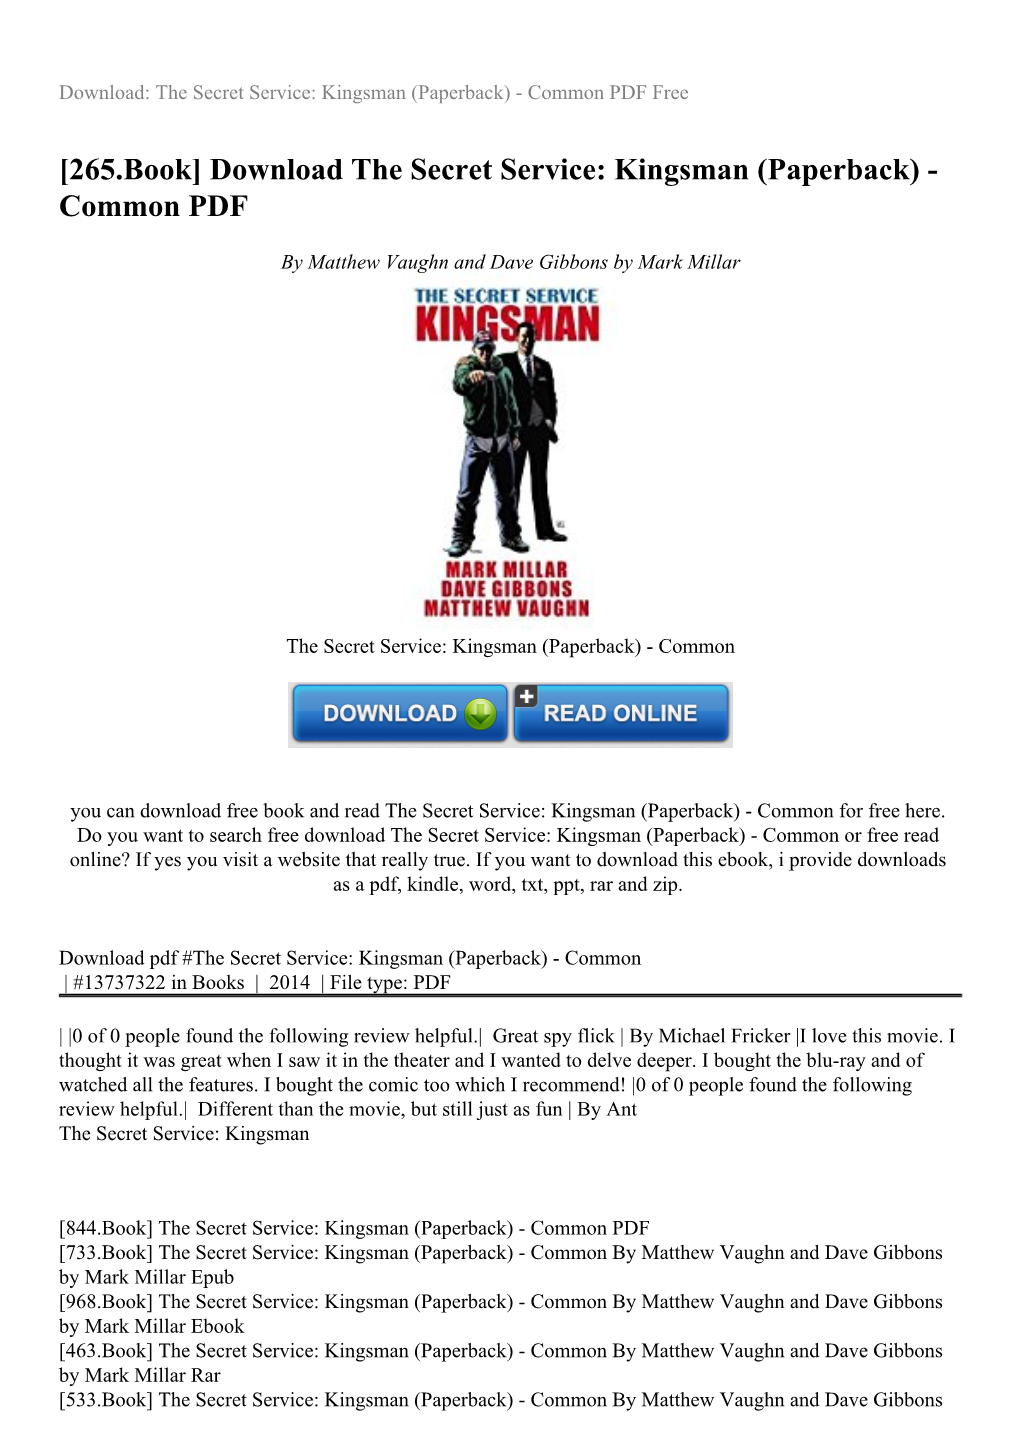 Download the Secret Service: Kingsman (Paperback) - Common PDF